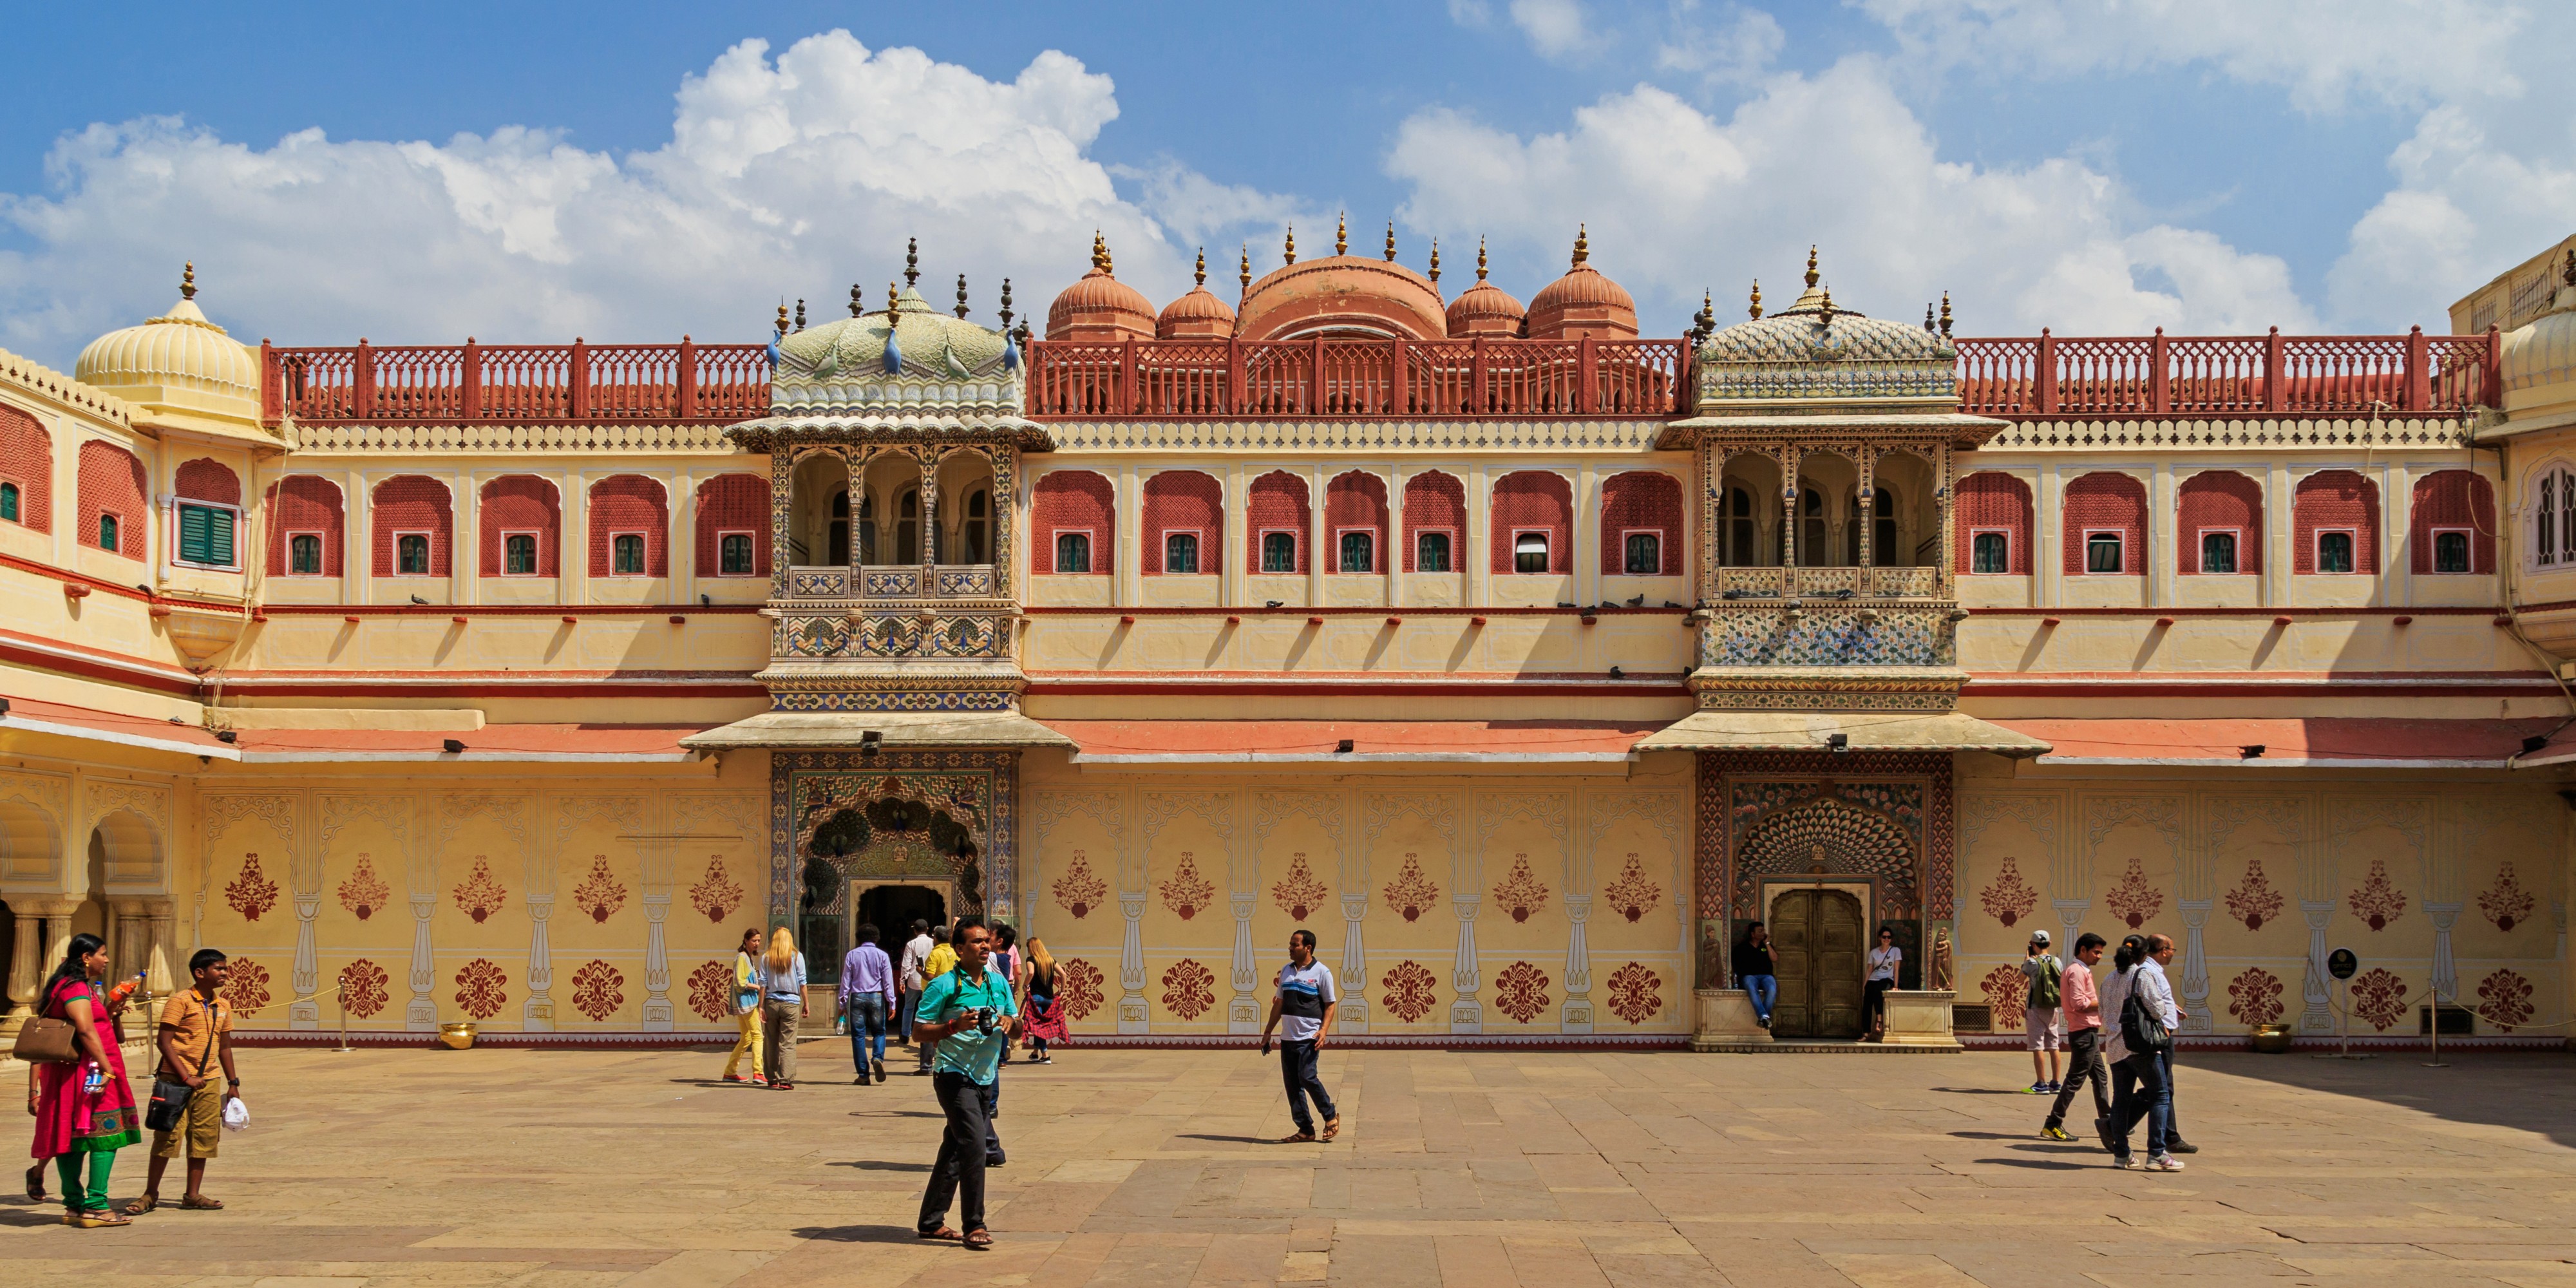 Jaipur 03-2016 21 City Palace complex